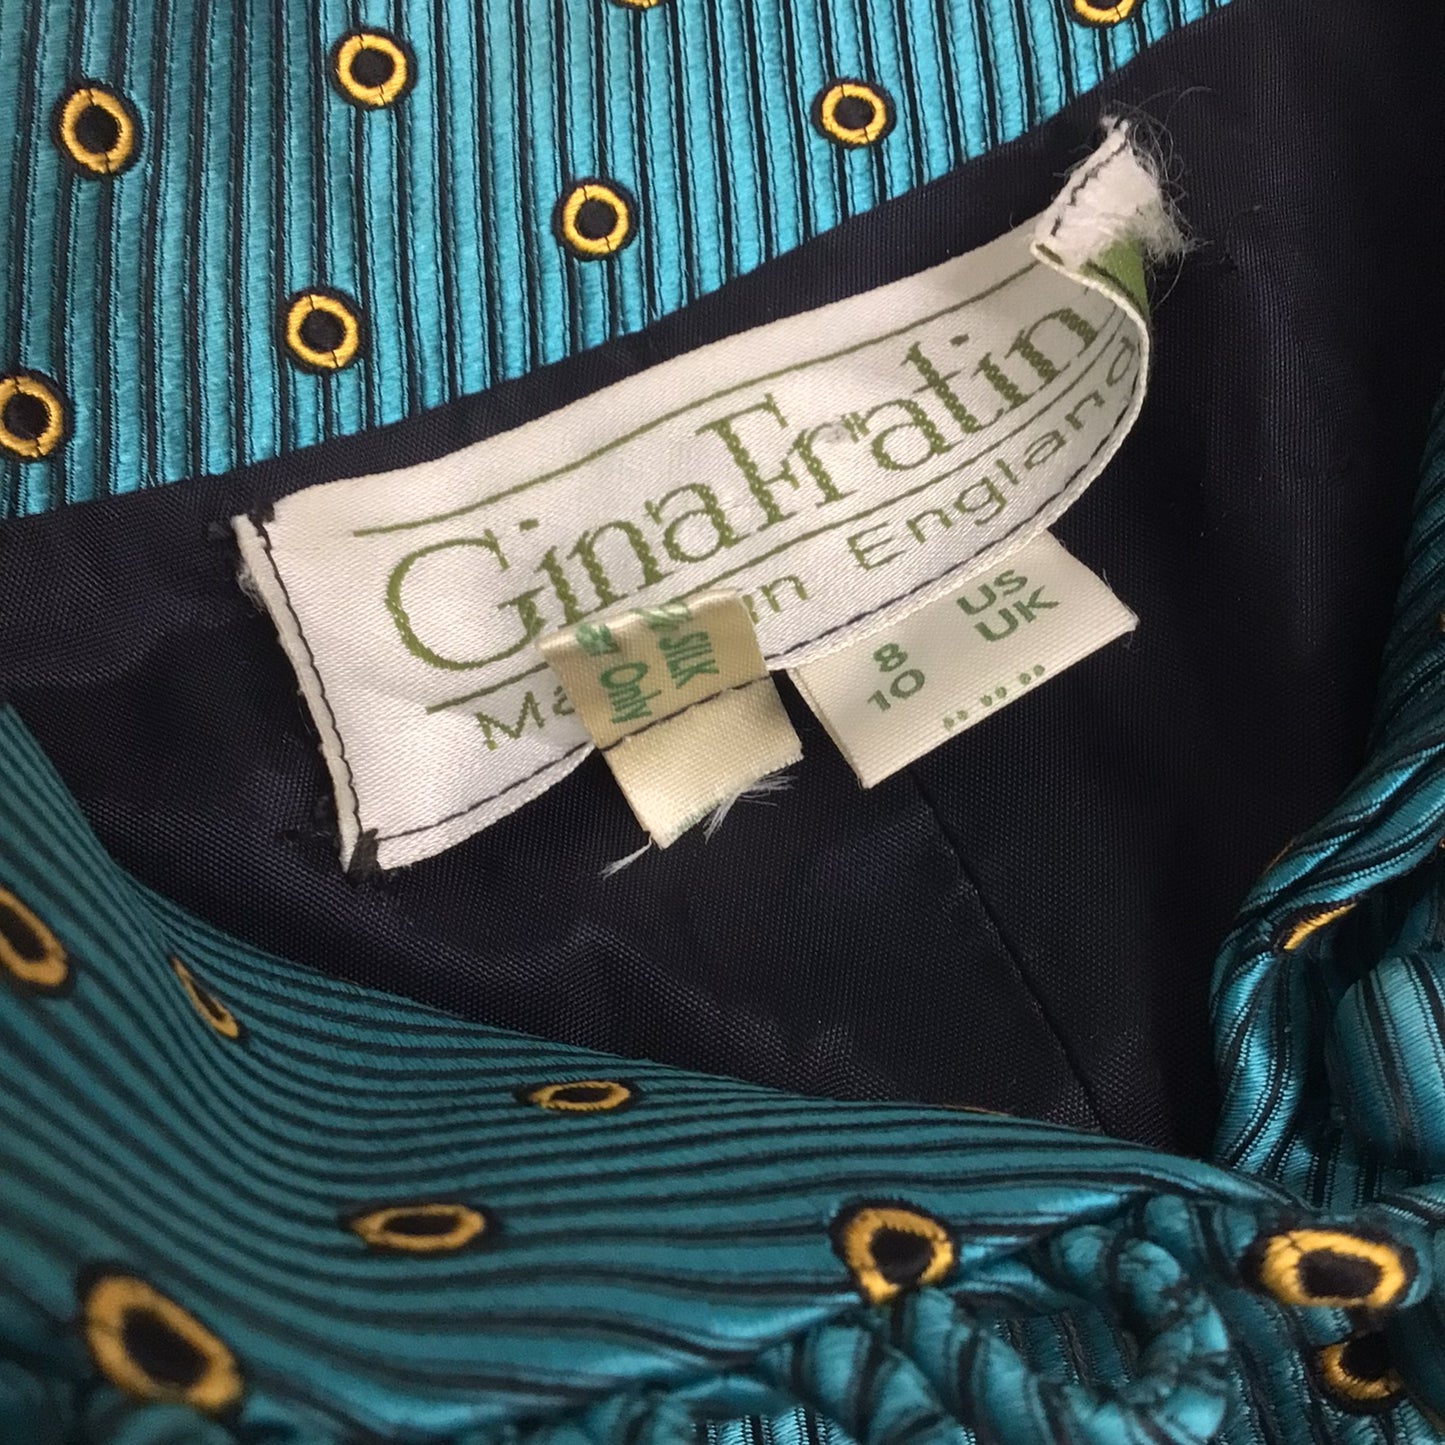 Vintage Gina Fratini Teal Blue Spotted Buttoned Jacket w/Pockets 100% Silk Size 10